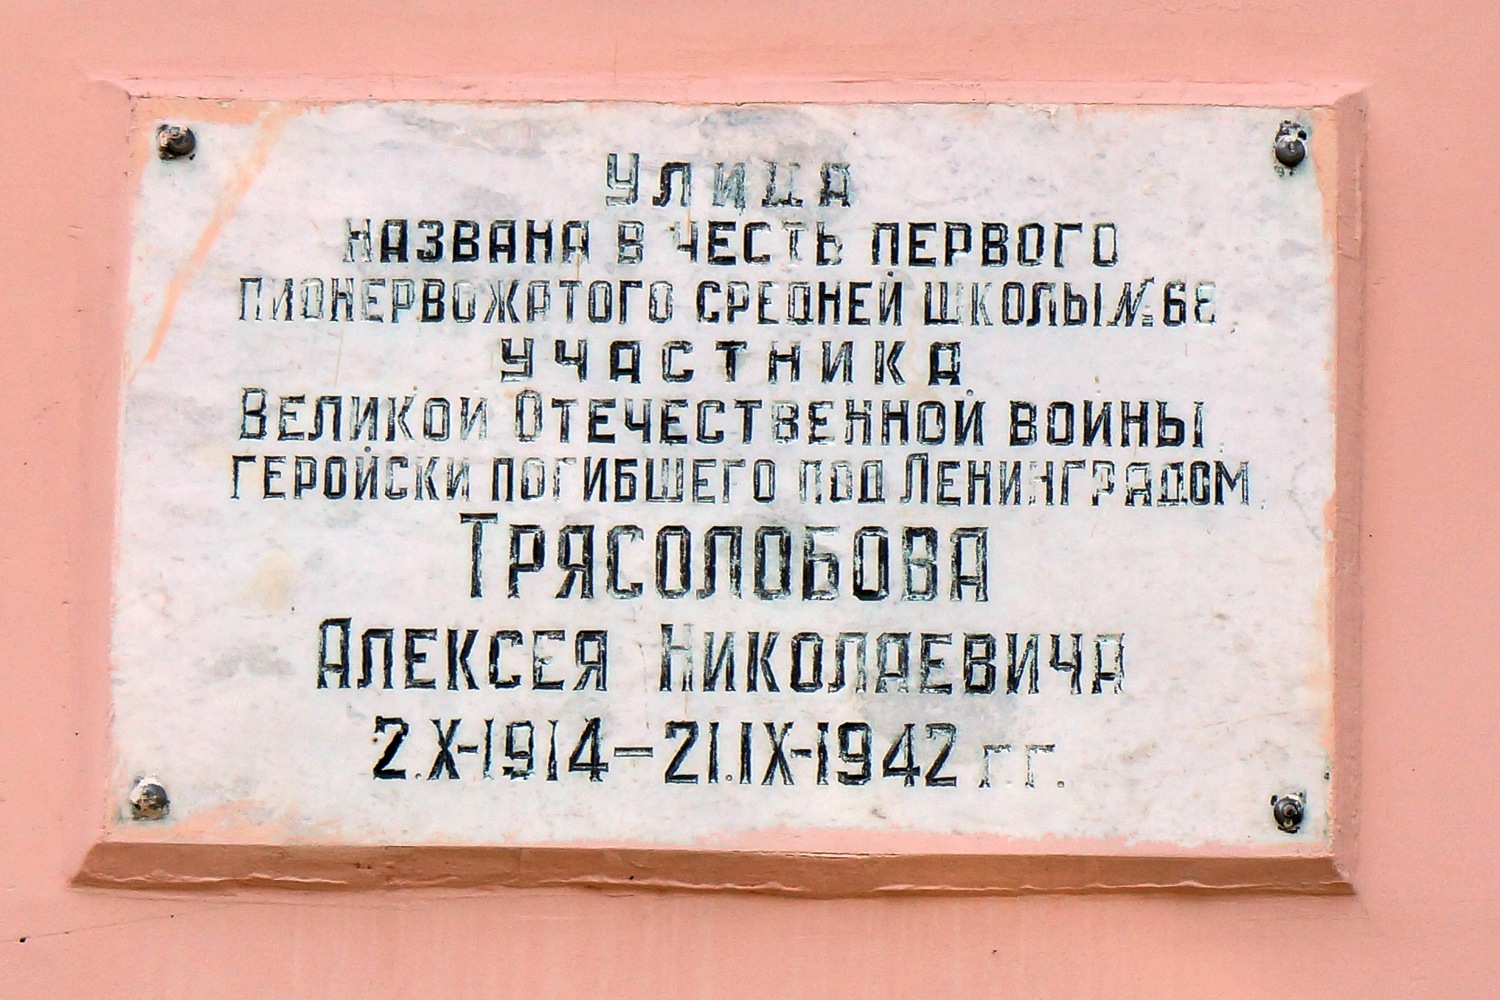 Perm, Улица Трясолобова, 105. Perm — Memorial plaques